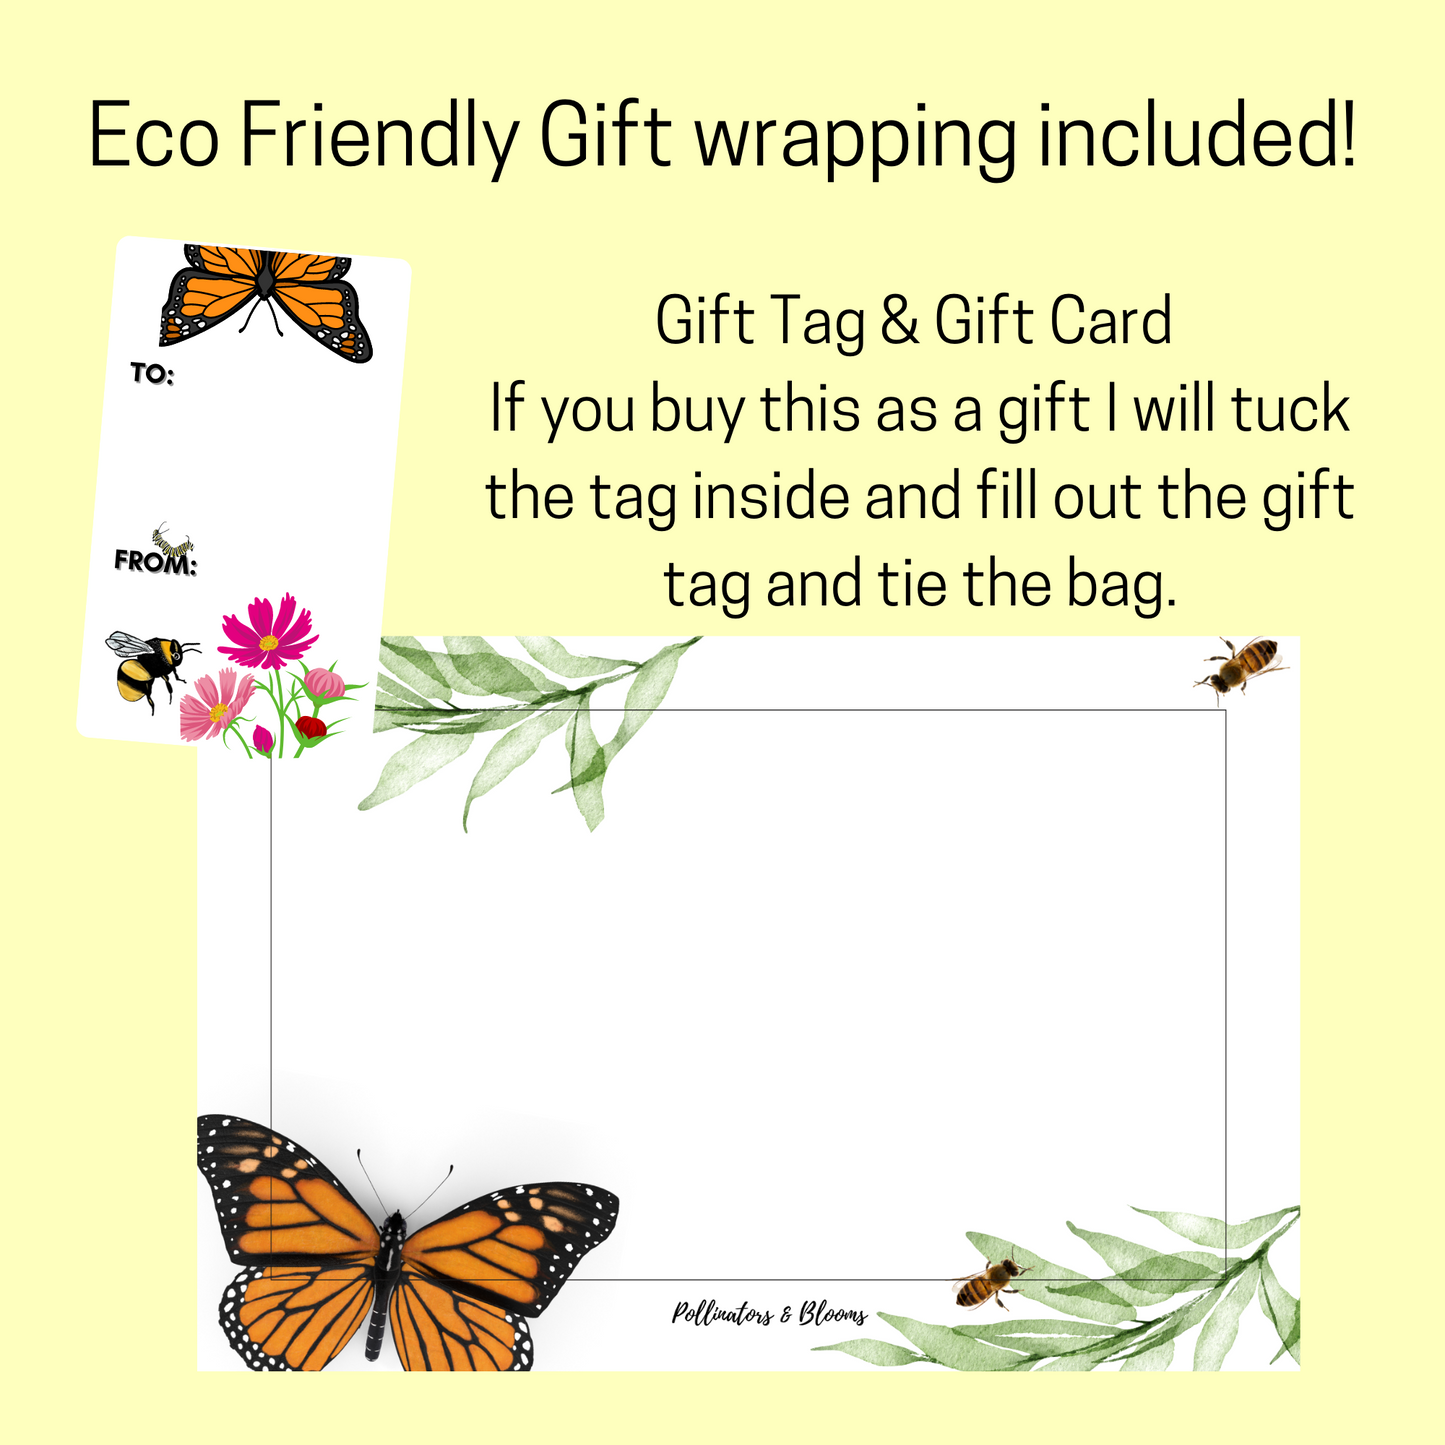 Pollinator Garden Gift Box - Bee - Butterfly and Hummingbird Seed Balls - Gardening Gift - Secret Santa - Garden gifts for mom